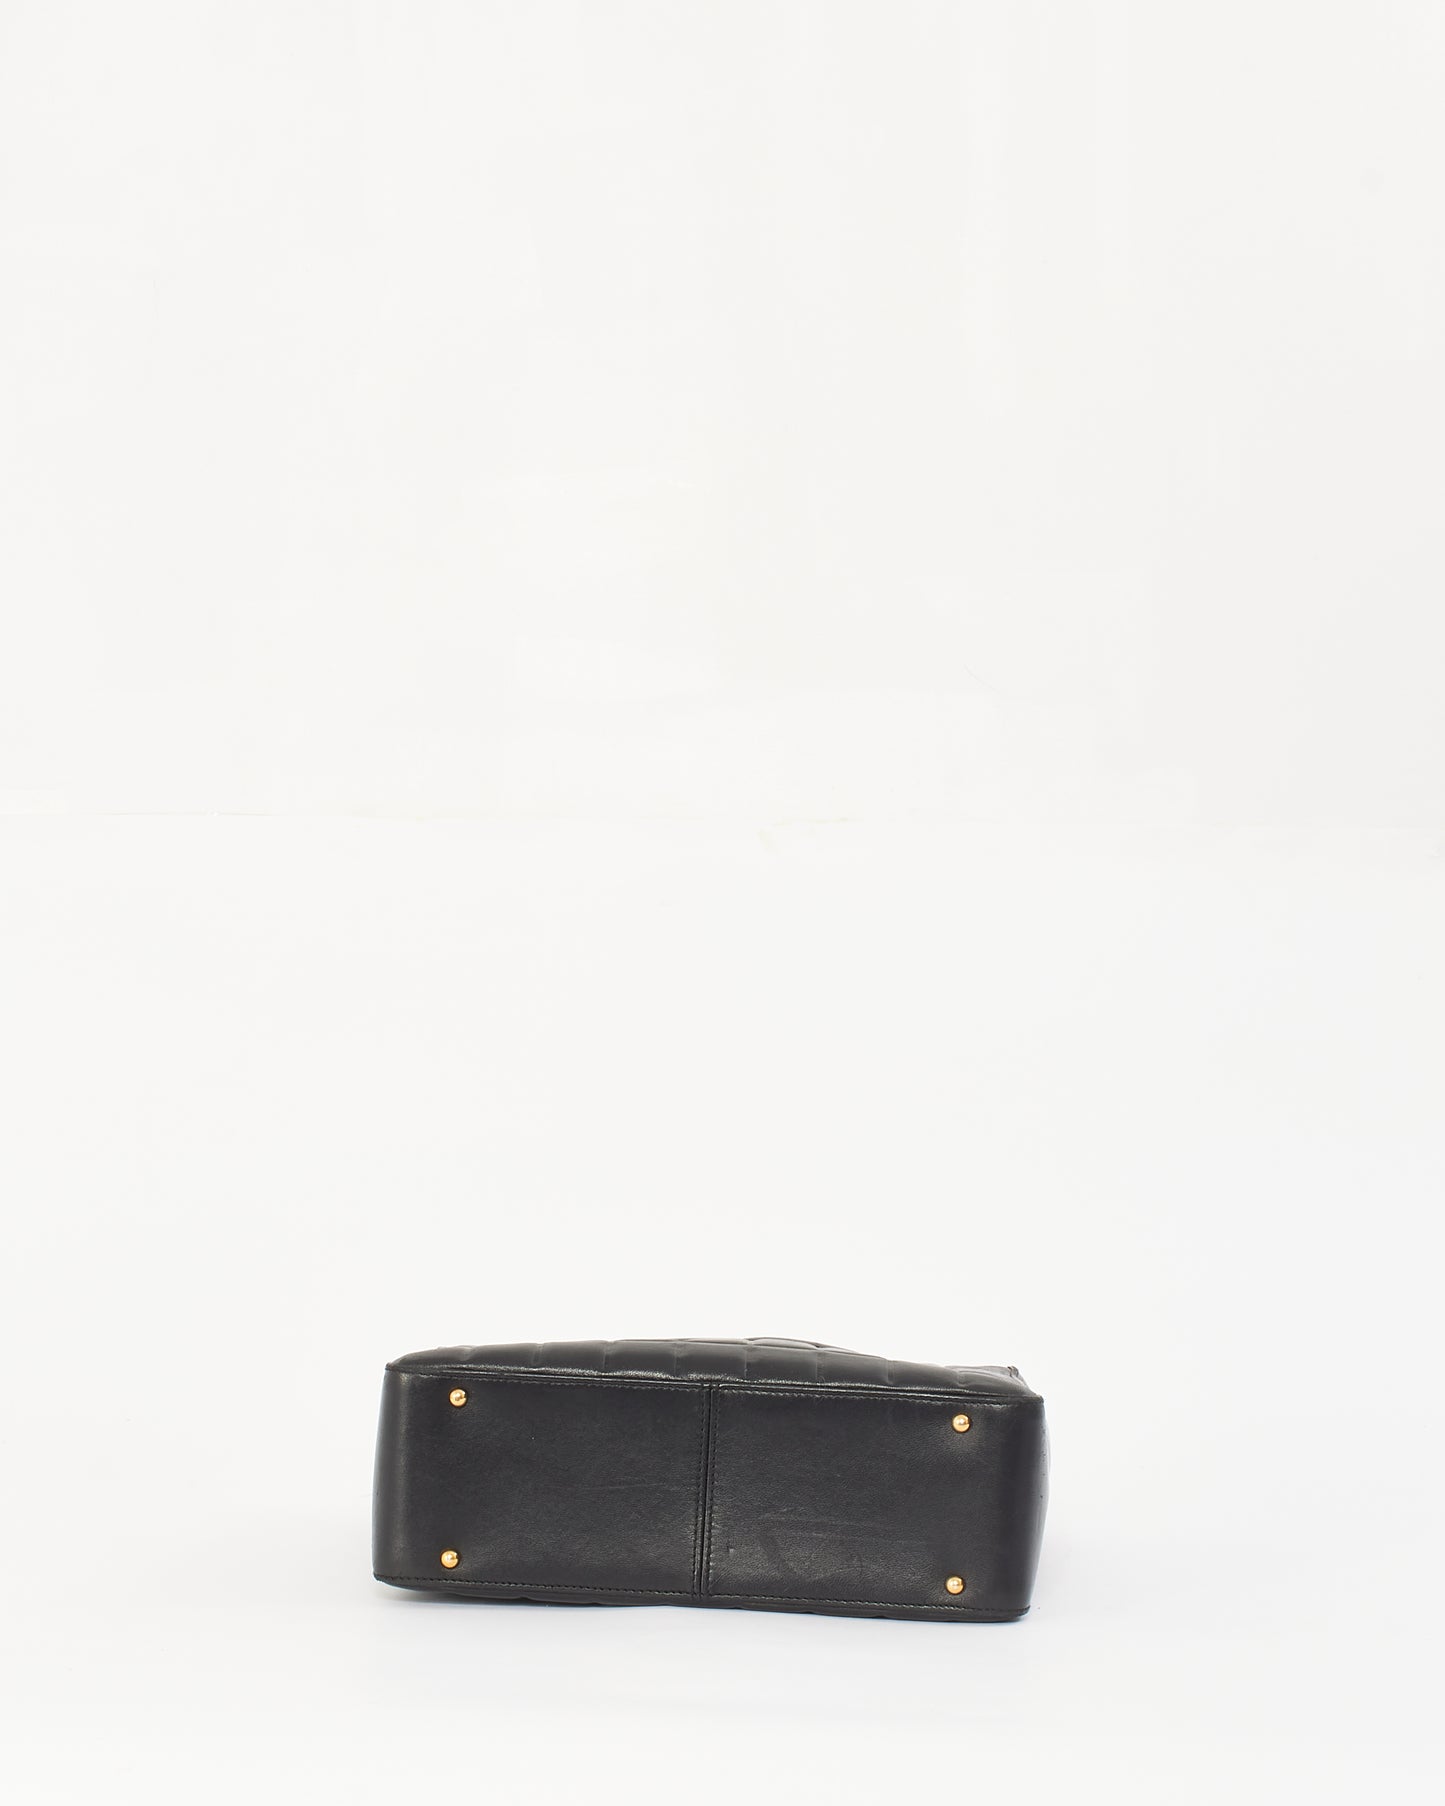 Chanel Black Leather E/W Chocolate Bar Tote Bag